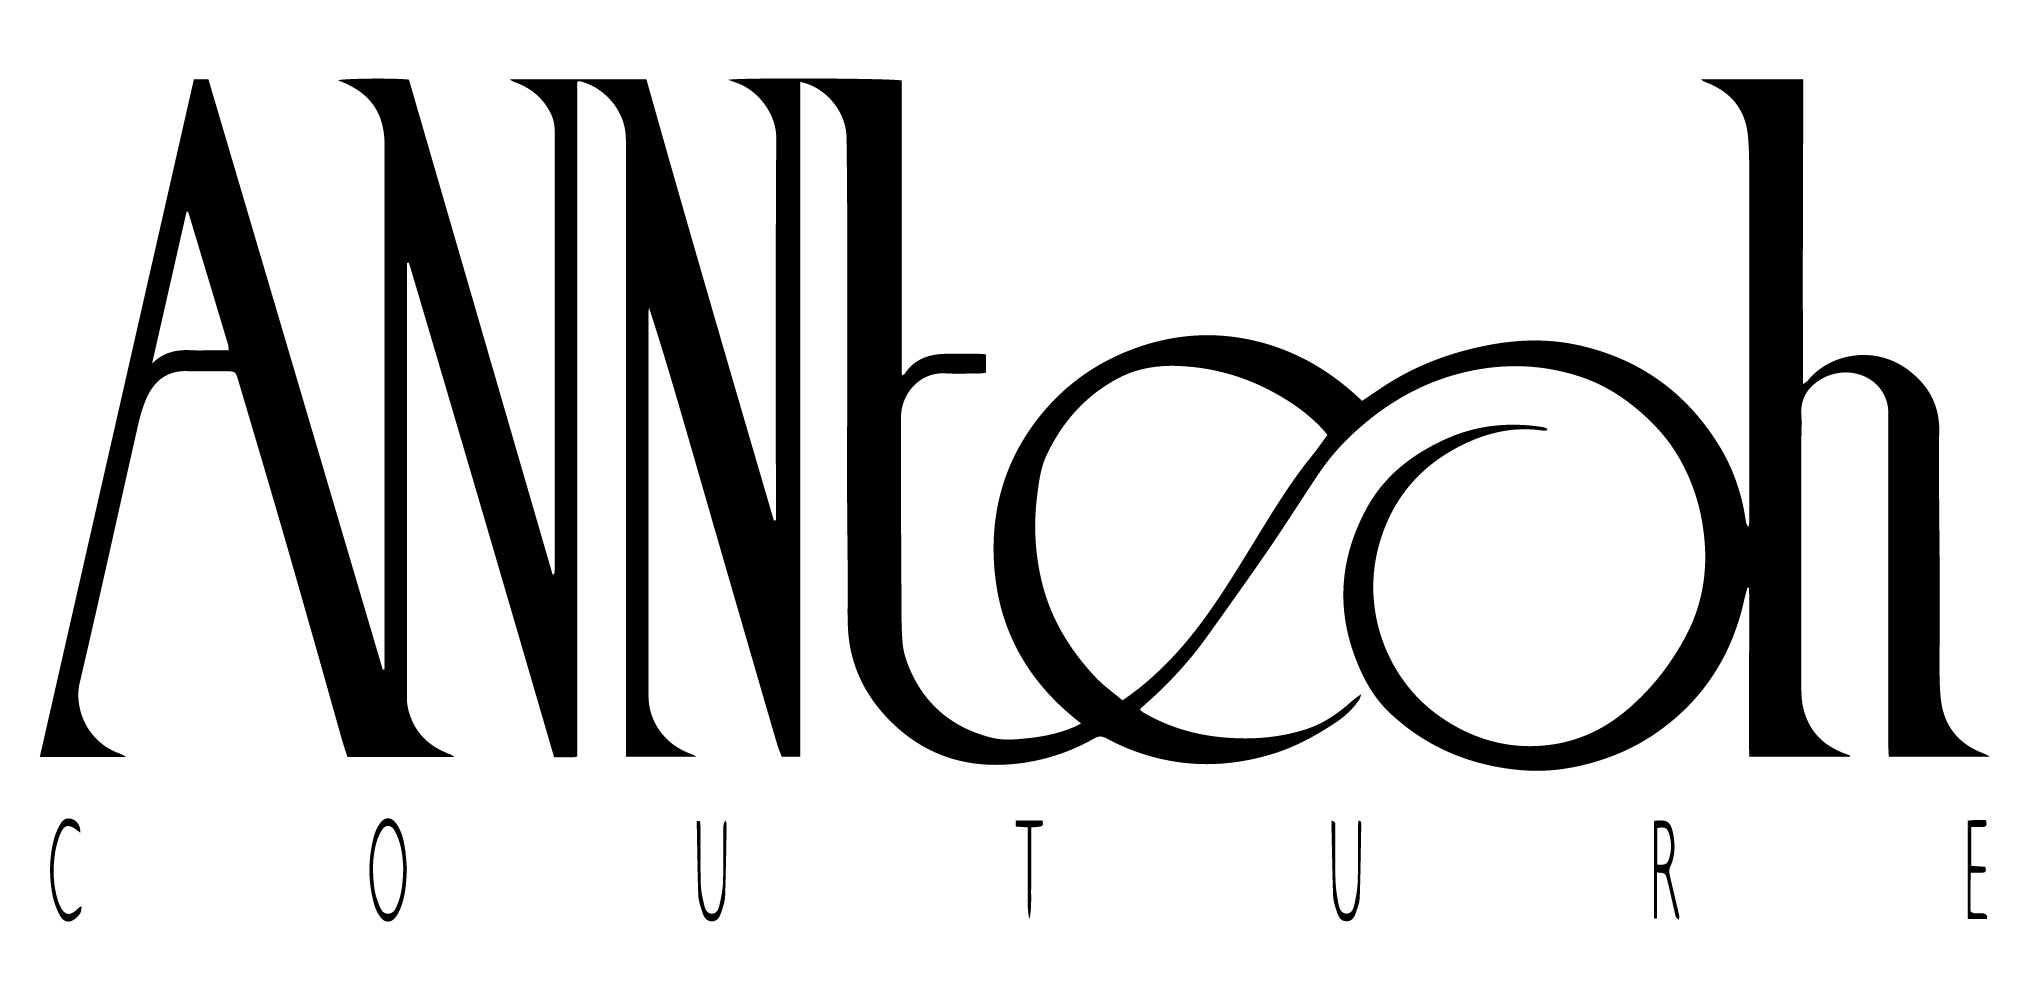 AnnTeoh_Logo.png